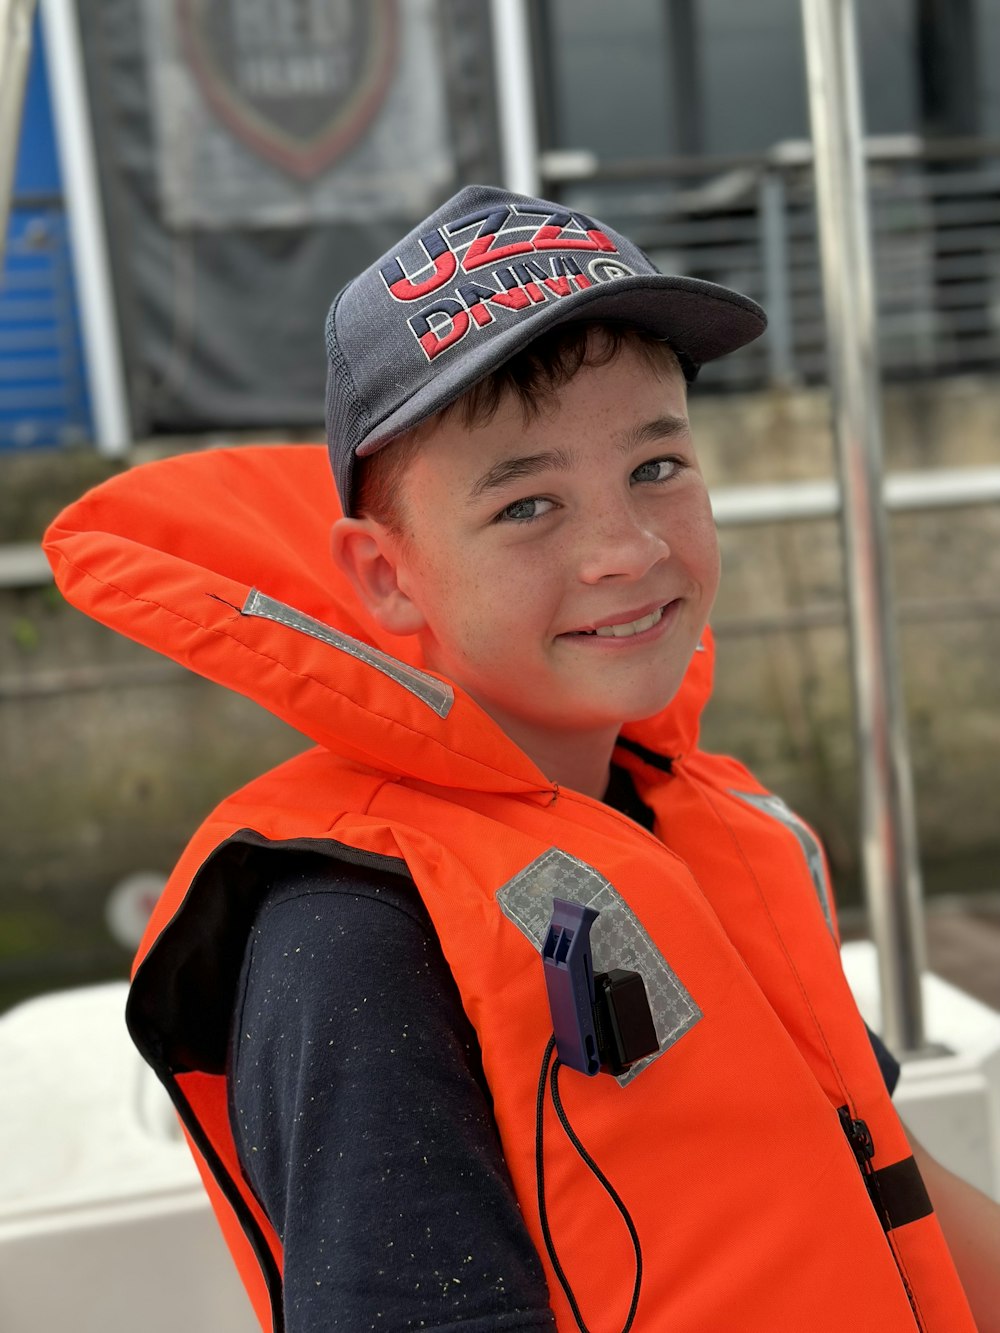 a young boy wearing an orange life jacket